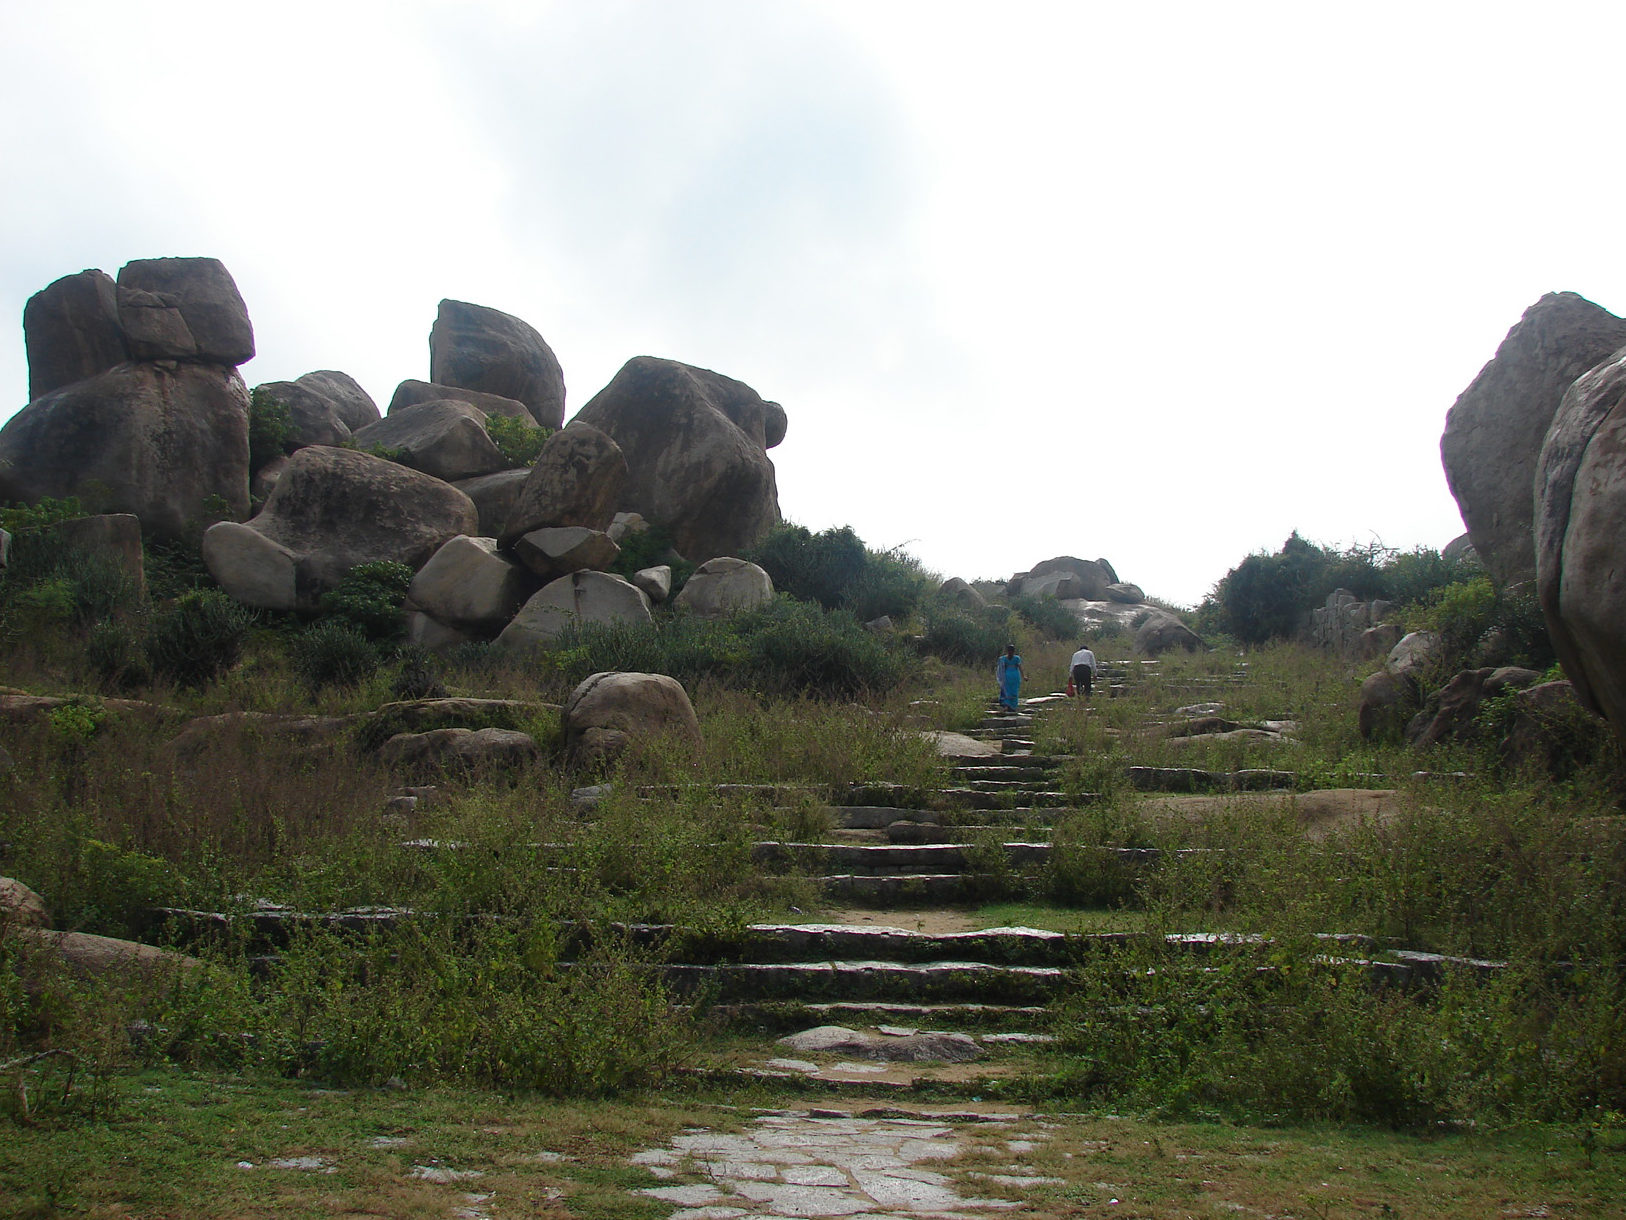 Hampi on foot - The climb up to Achutaraya temple